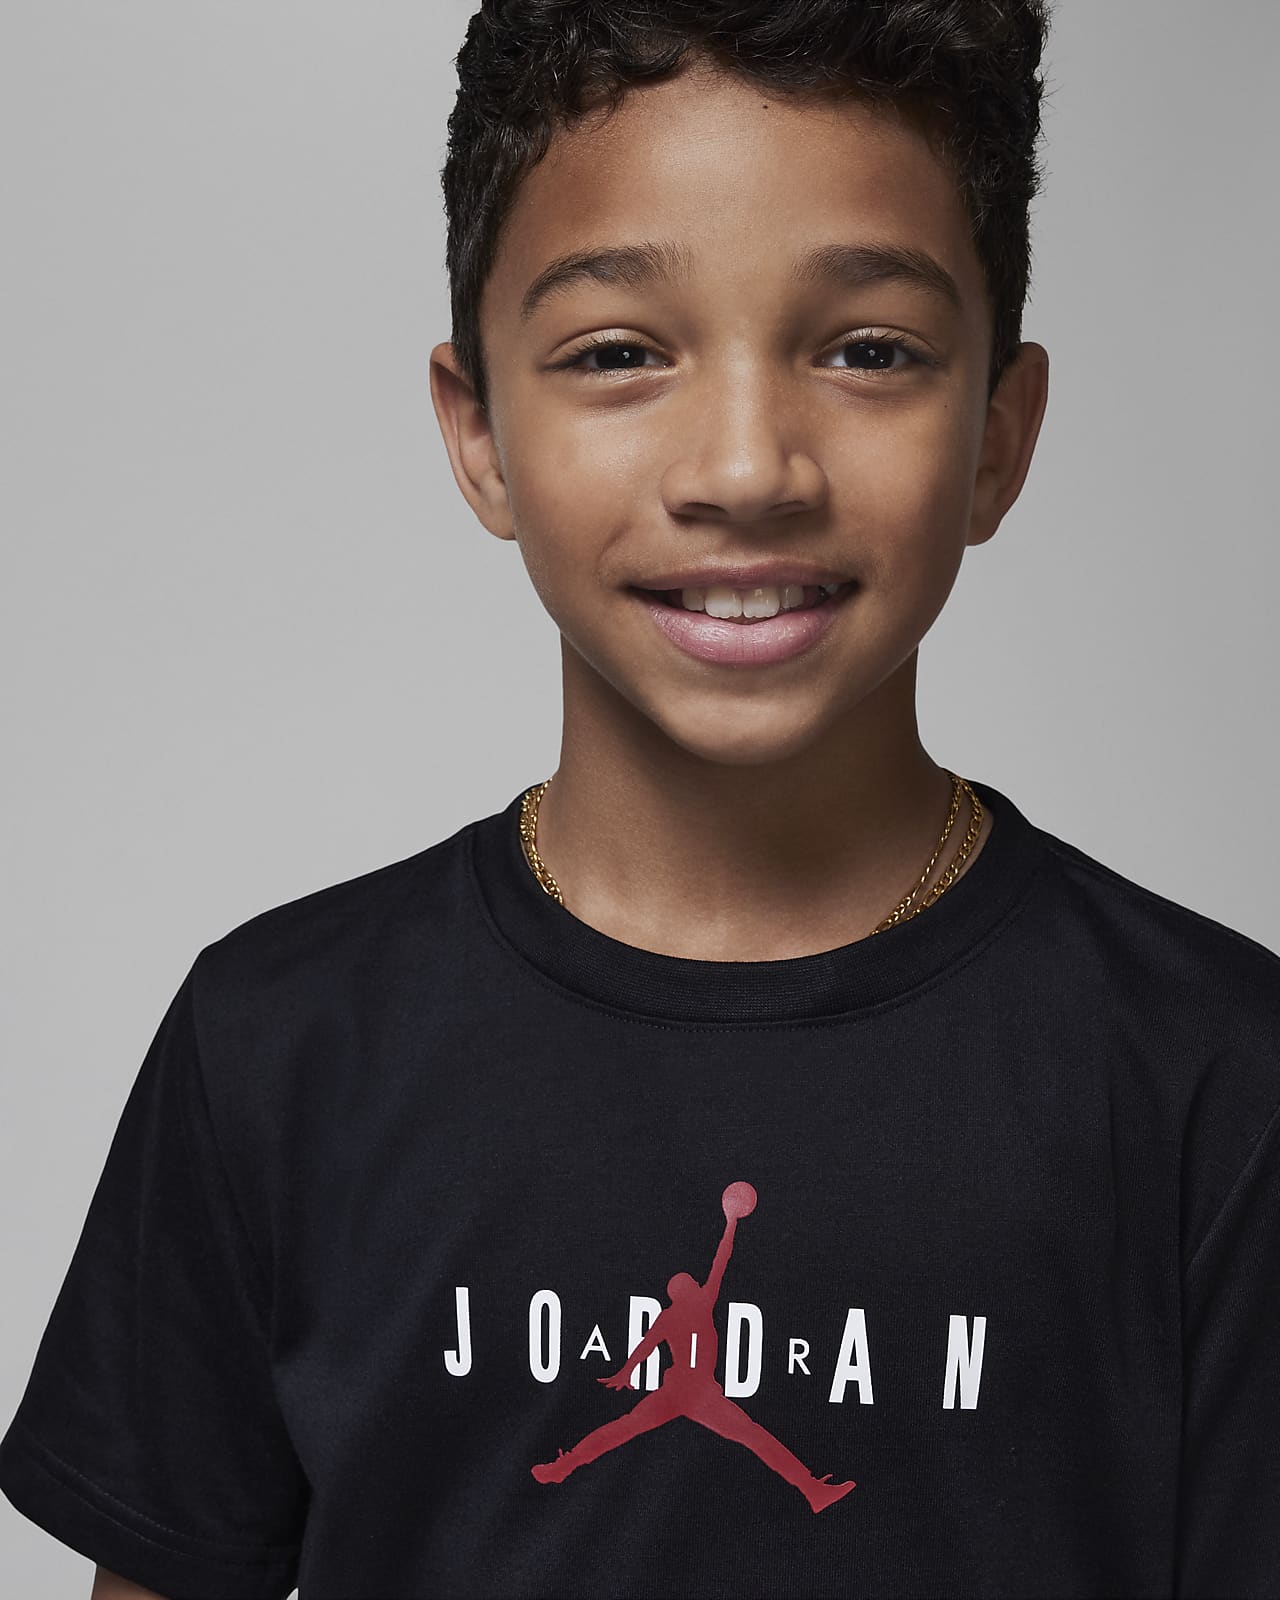 Jordan Jumpman Air Younger Kids' T-Shirt and Shorts Set. Nike LU